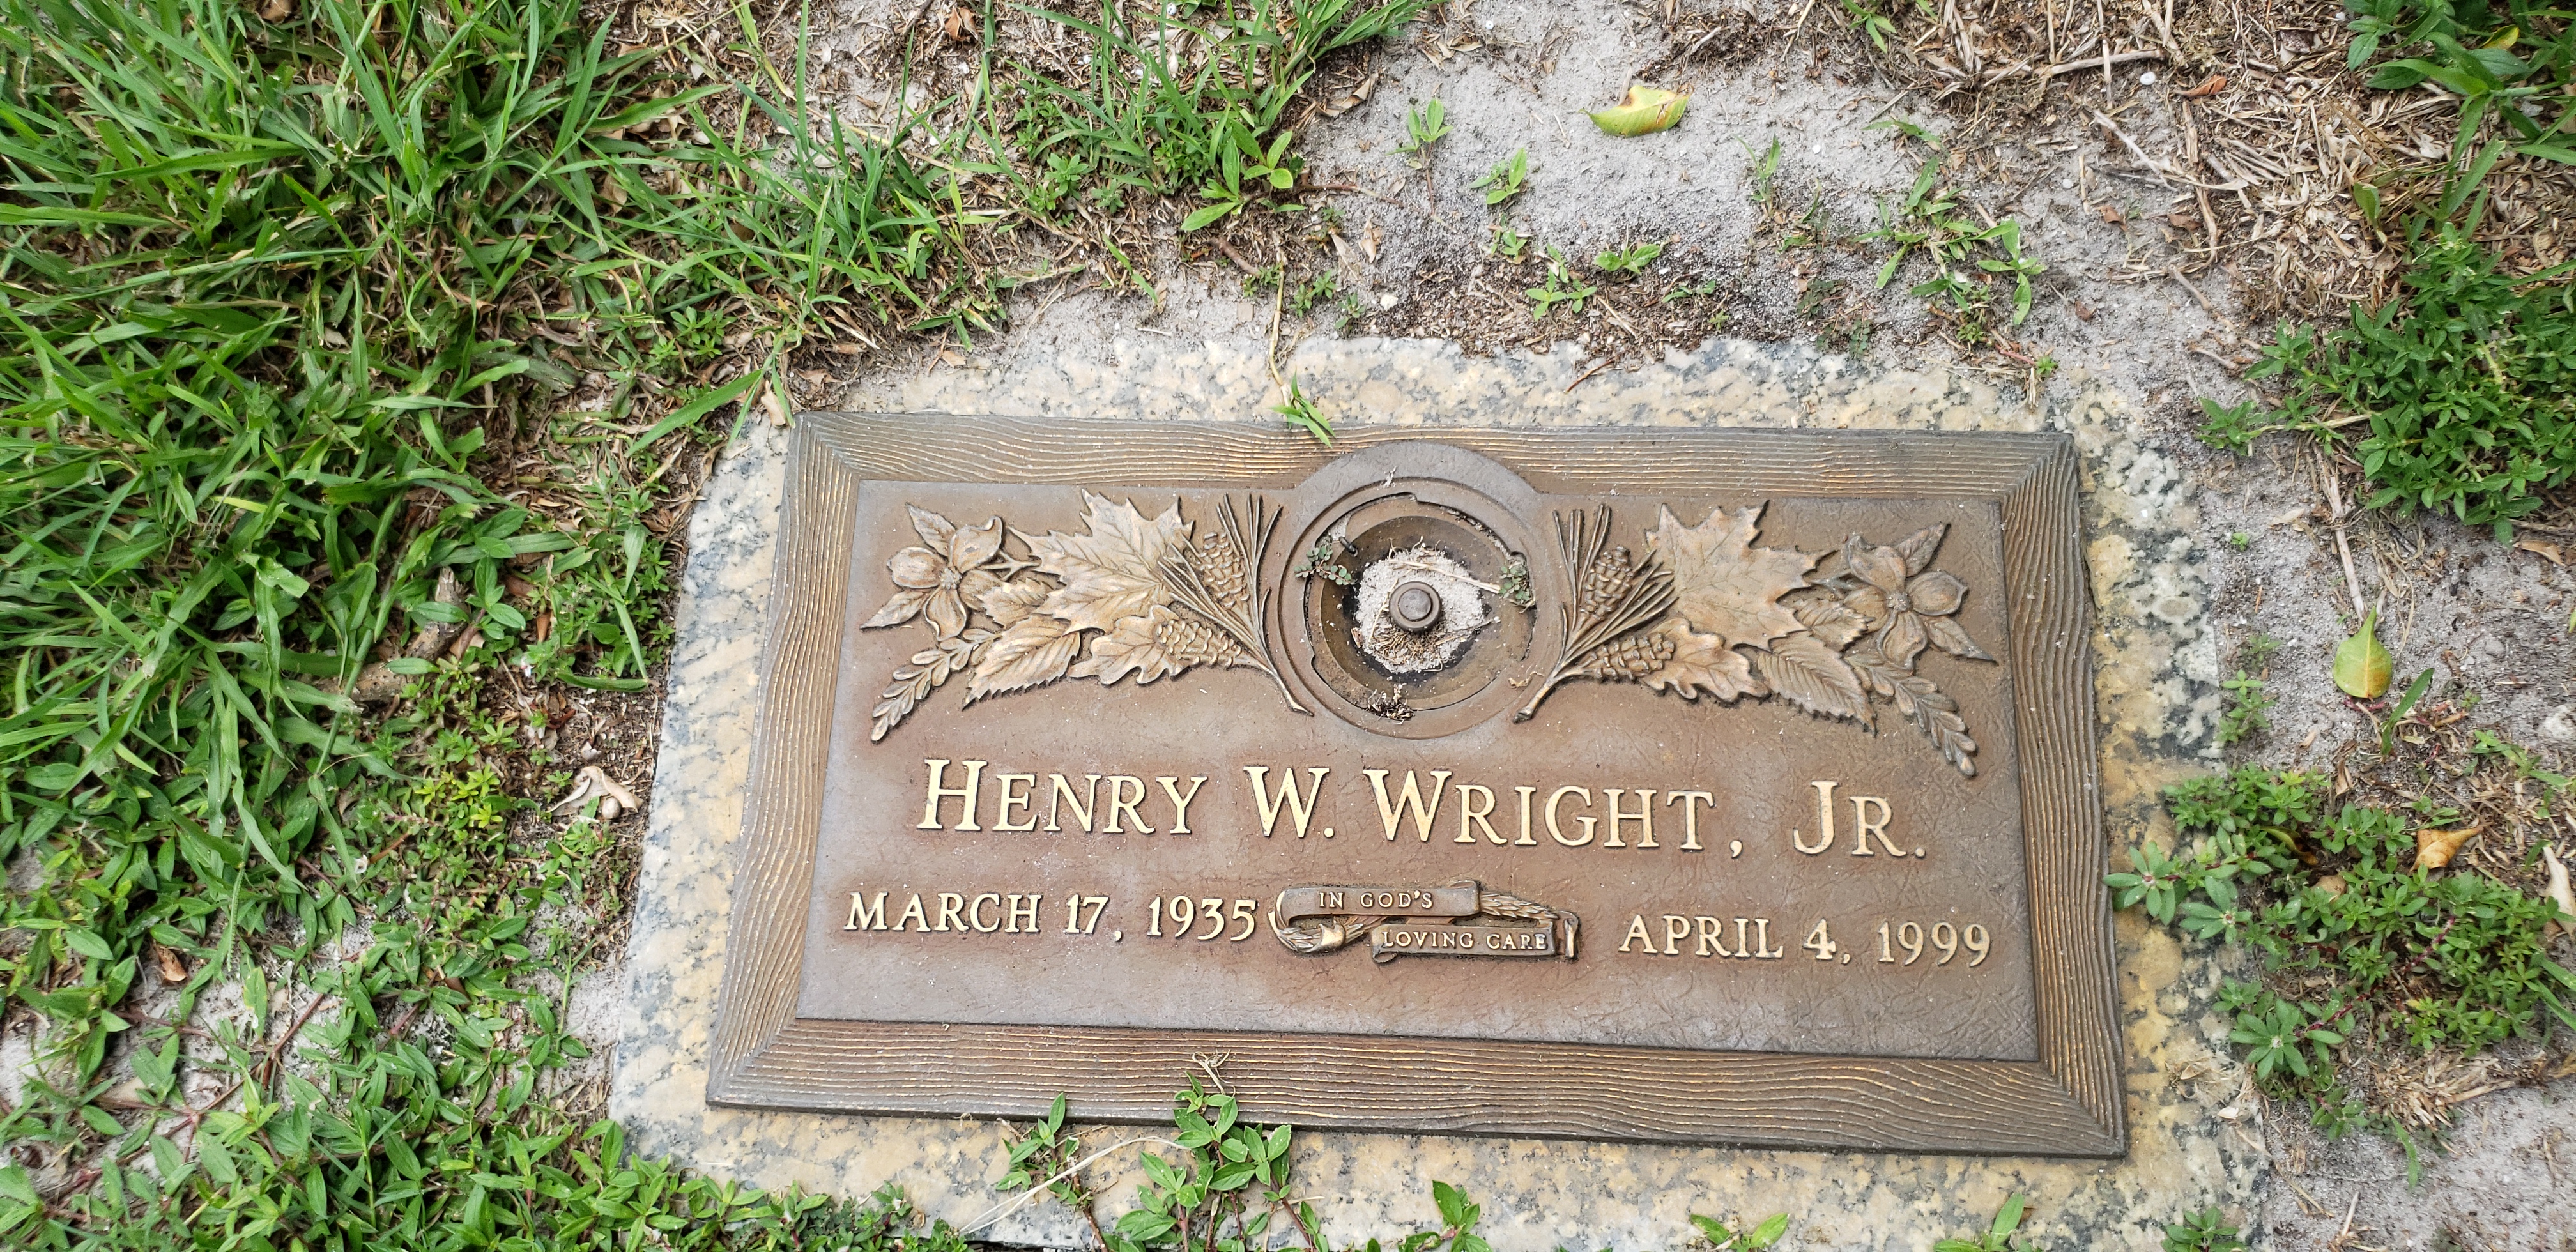 Henry W Wright, Jr